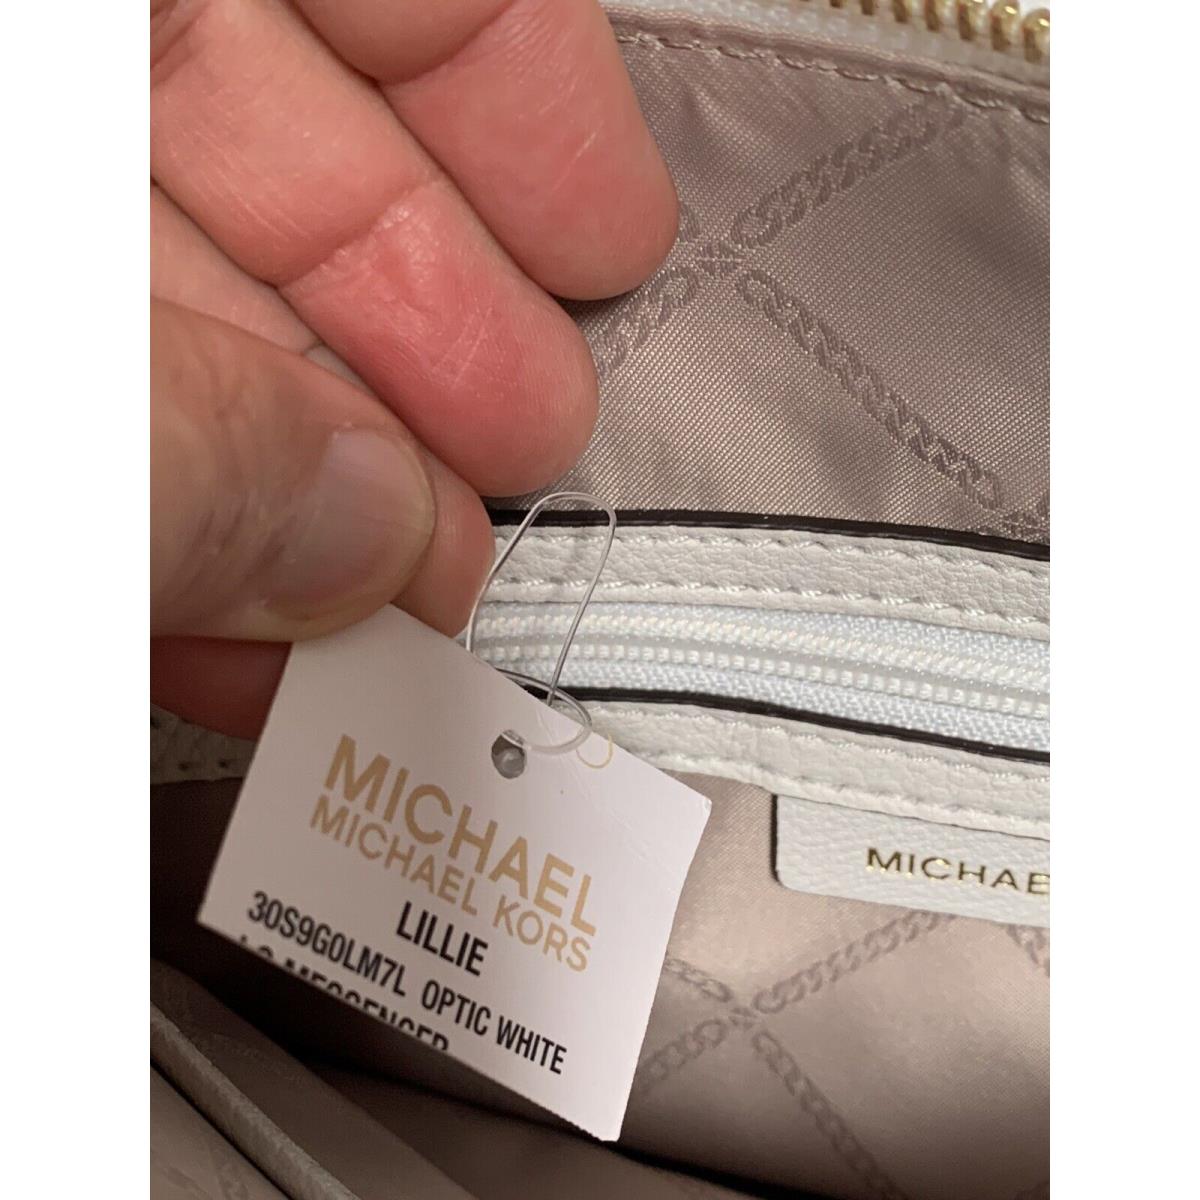 Michael Kors  bag  Lillie - White Exterior, Beige Lining, Gold Hardware 3